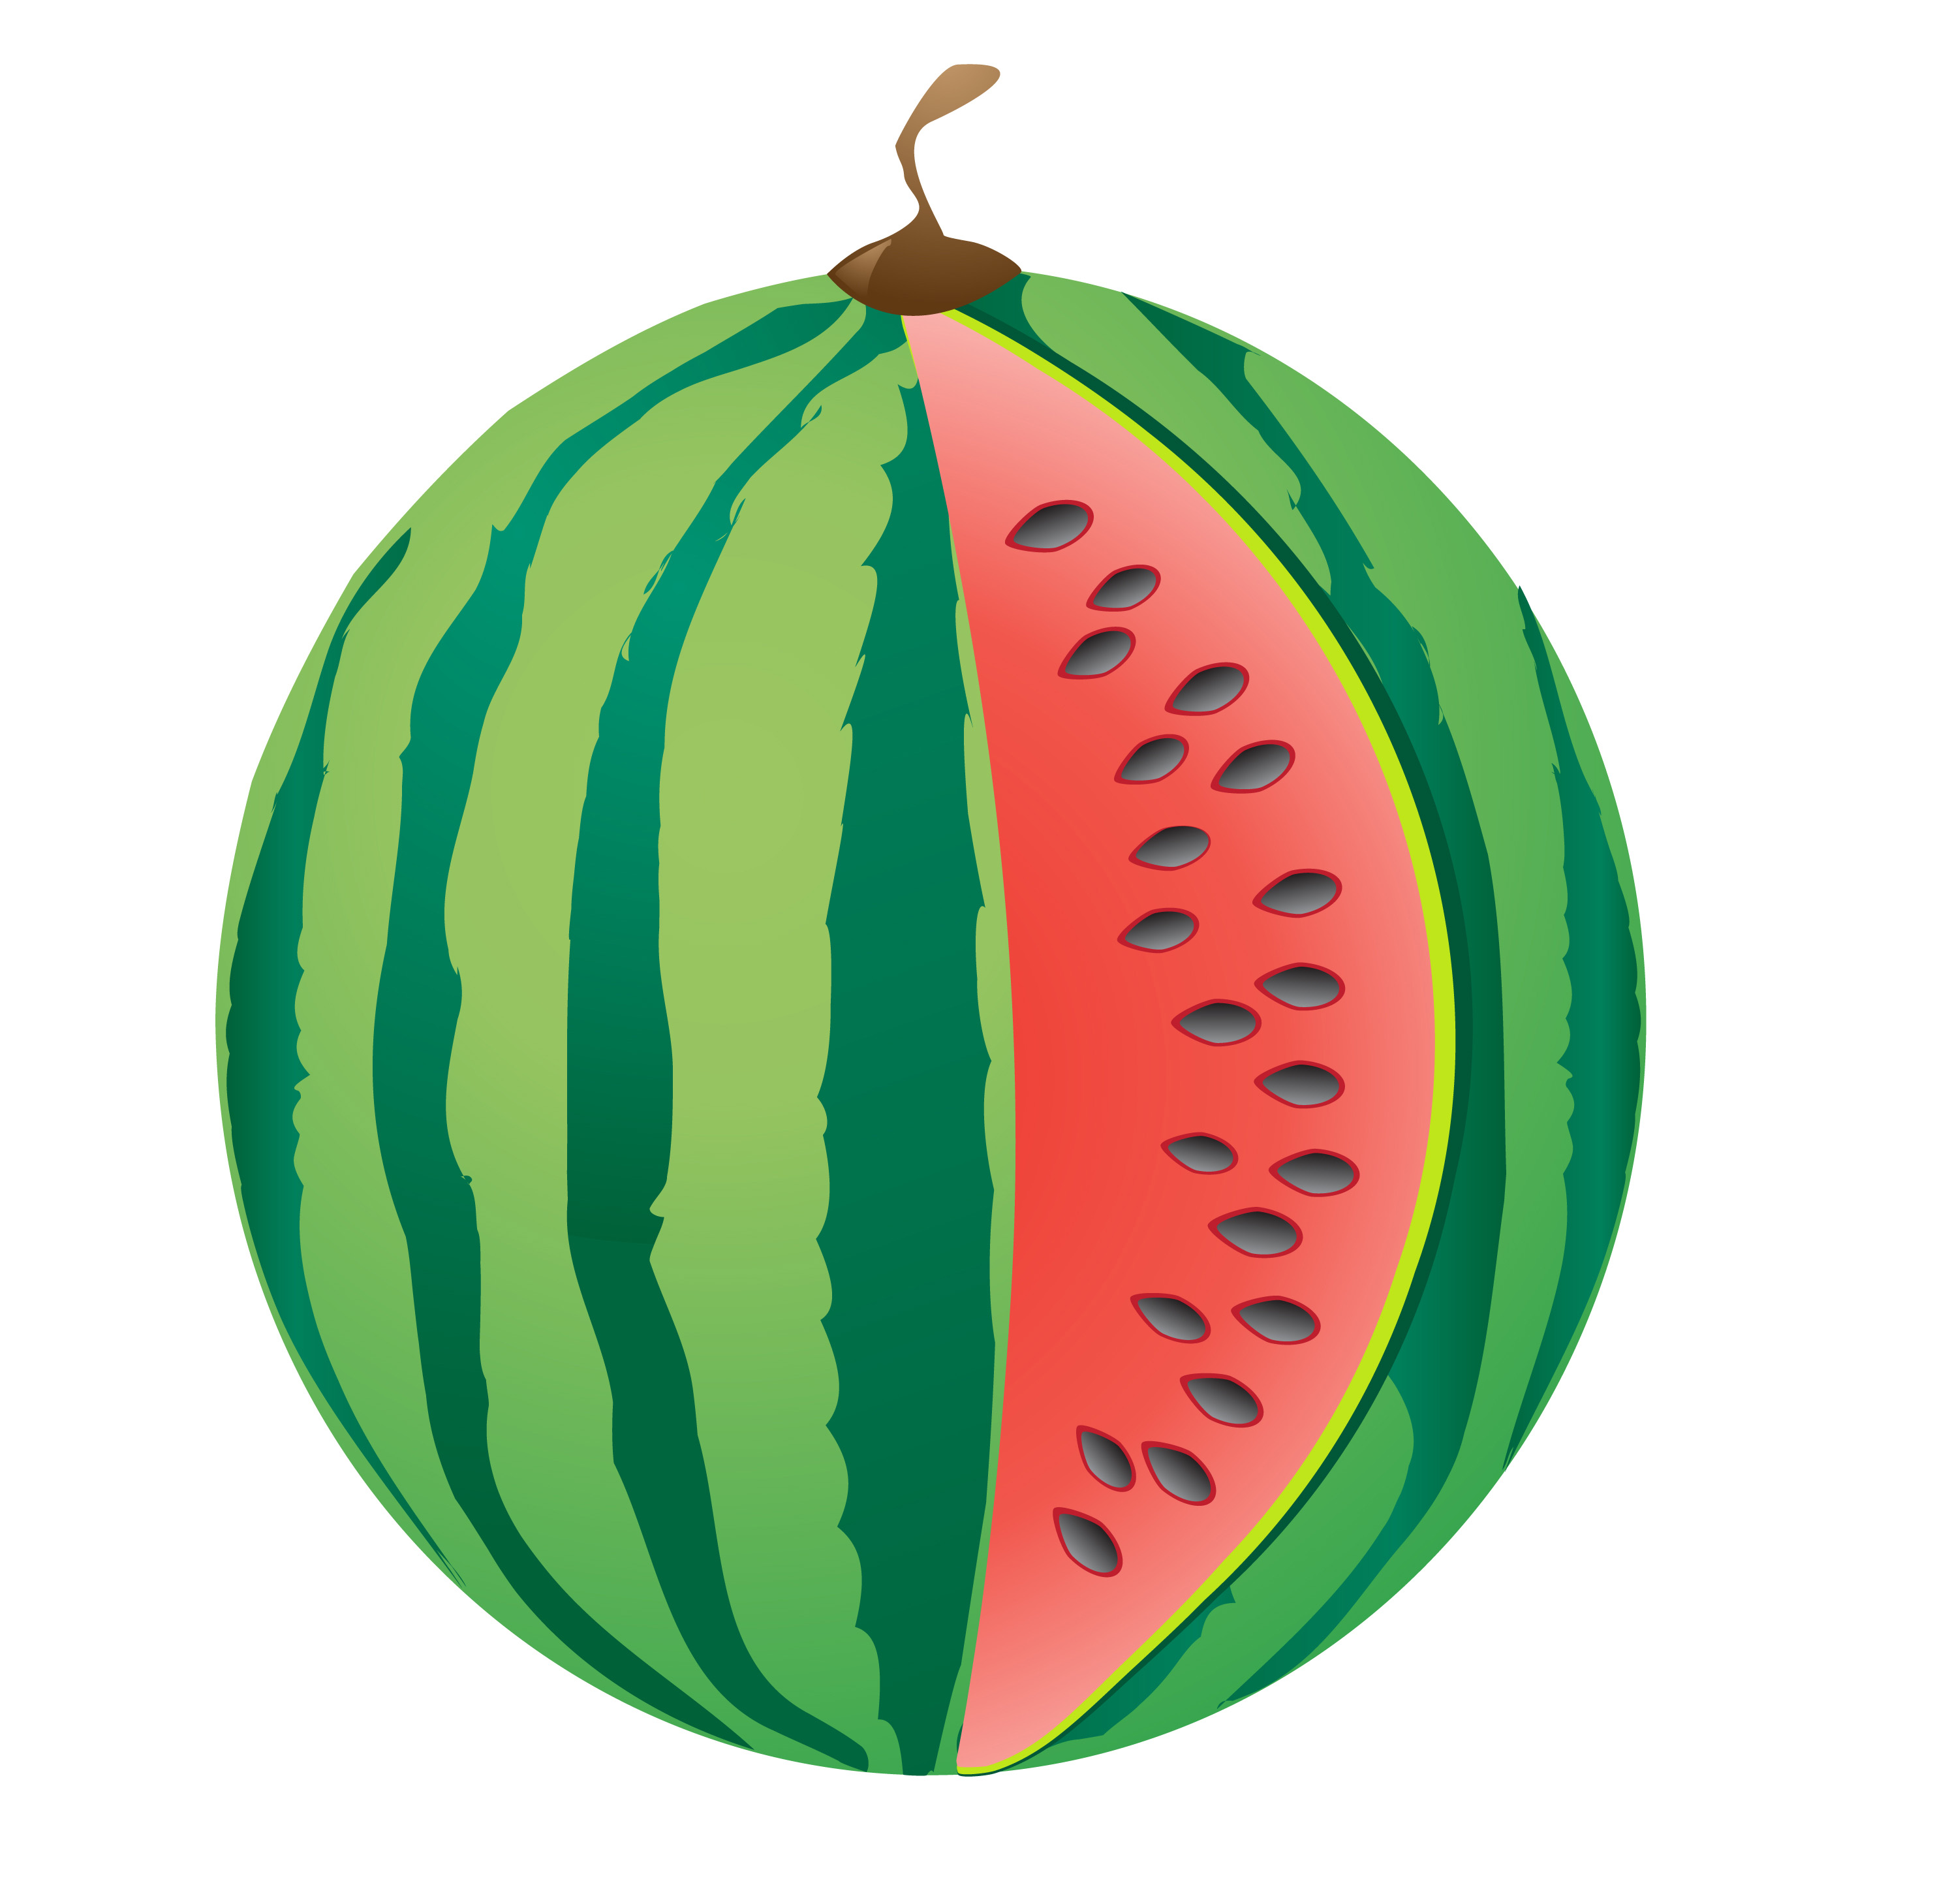 Download watermelon - Download Free Vectors, Clipart Graphics ...